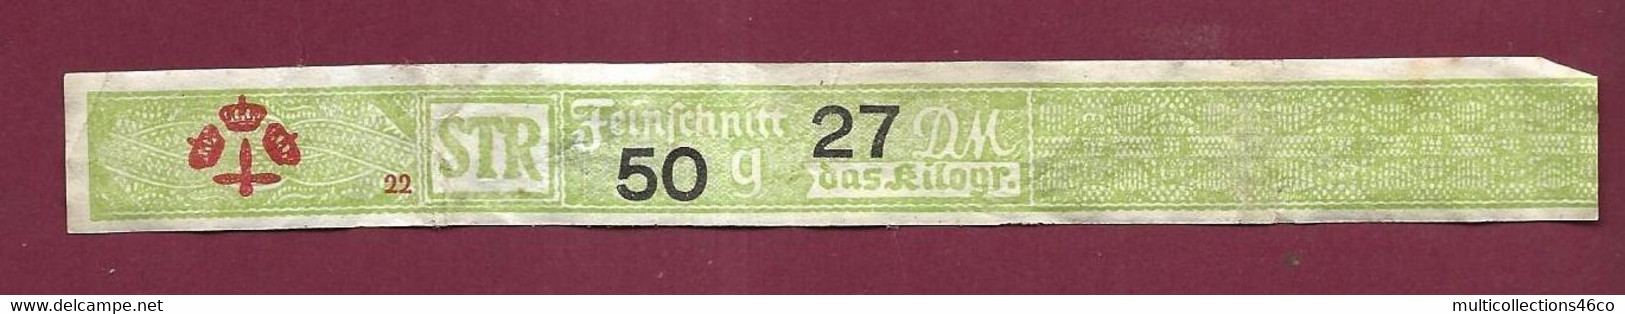 250122 - ETIQUETTE BANDE CIGARETTE - 22 STR 50g 27 DM DAS KILOGR. FEINSCHNUT - Documents